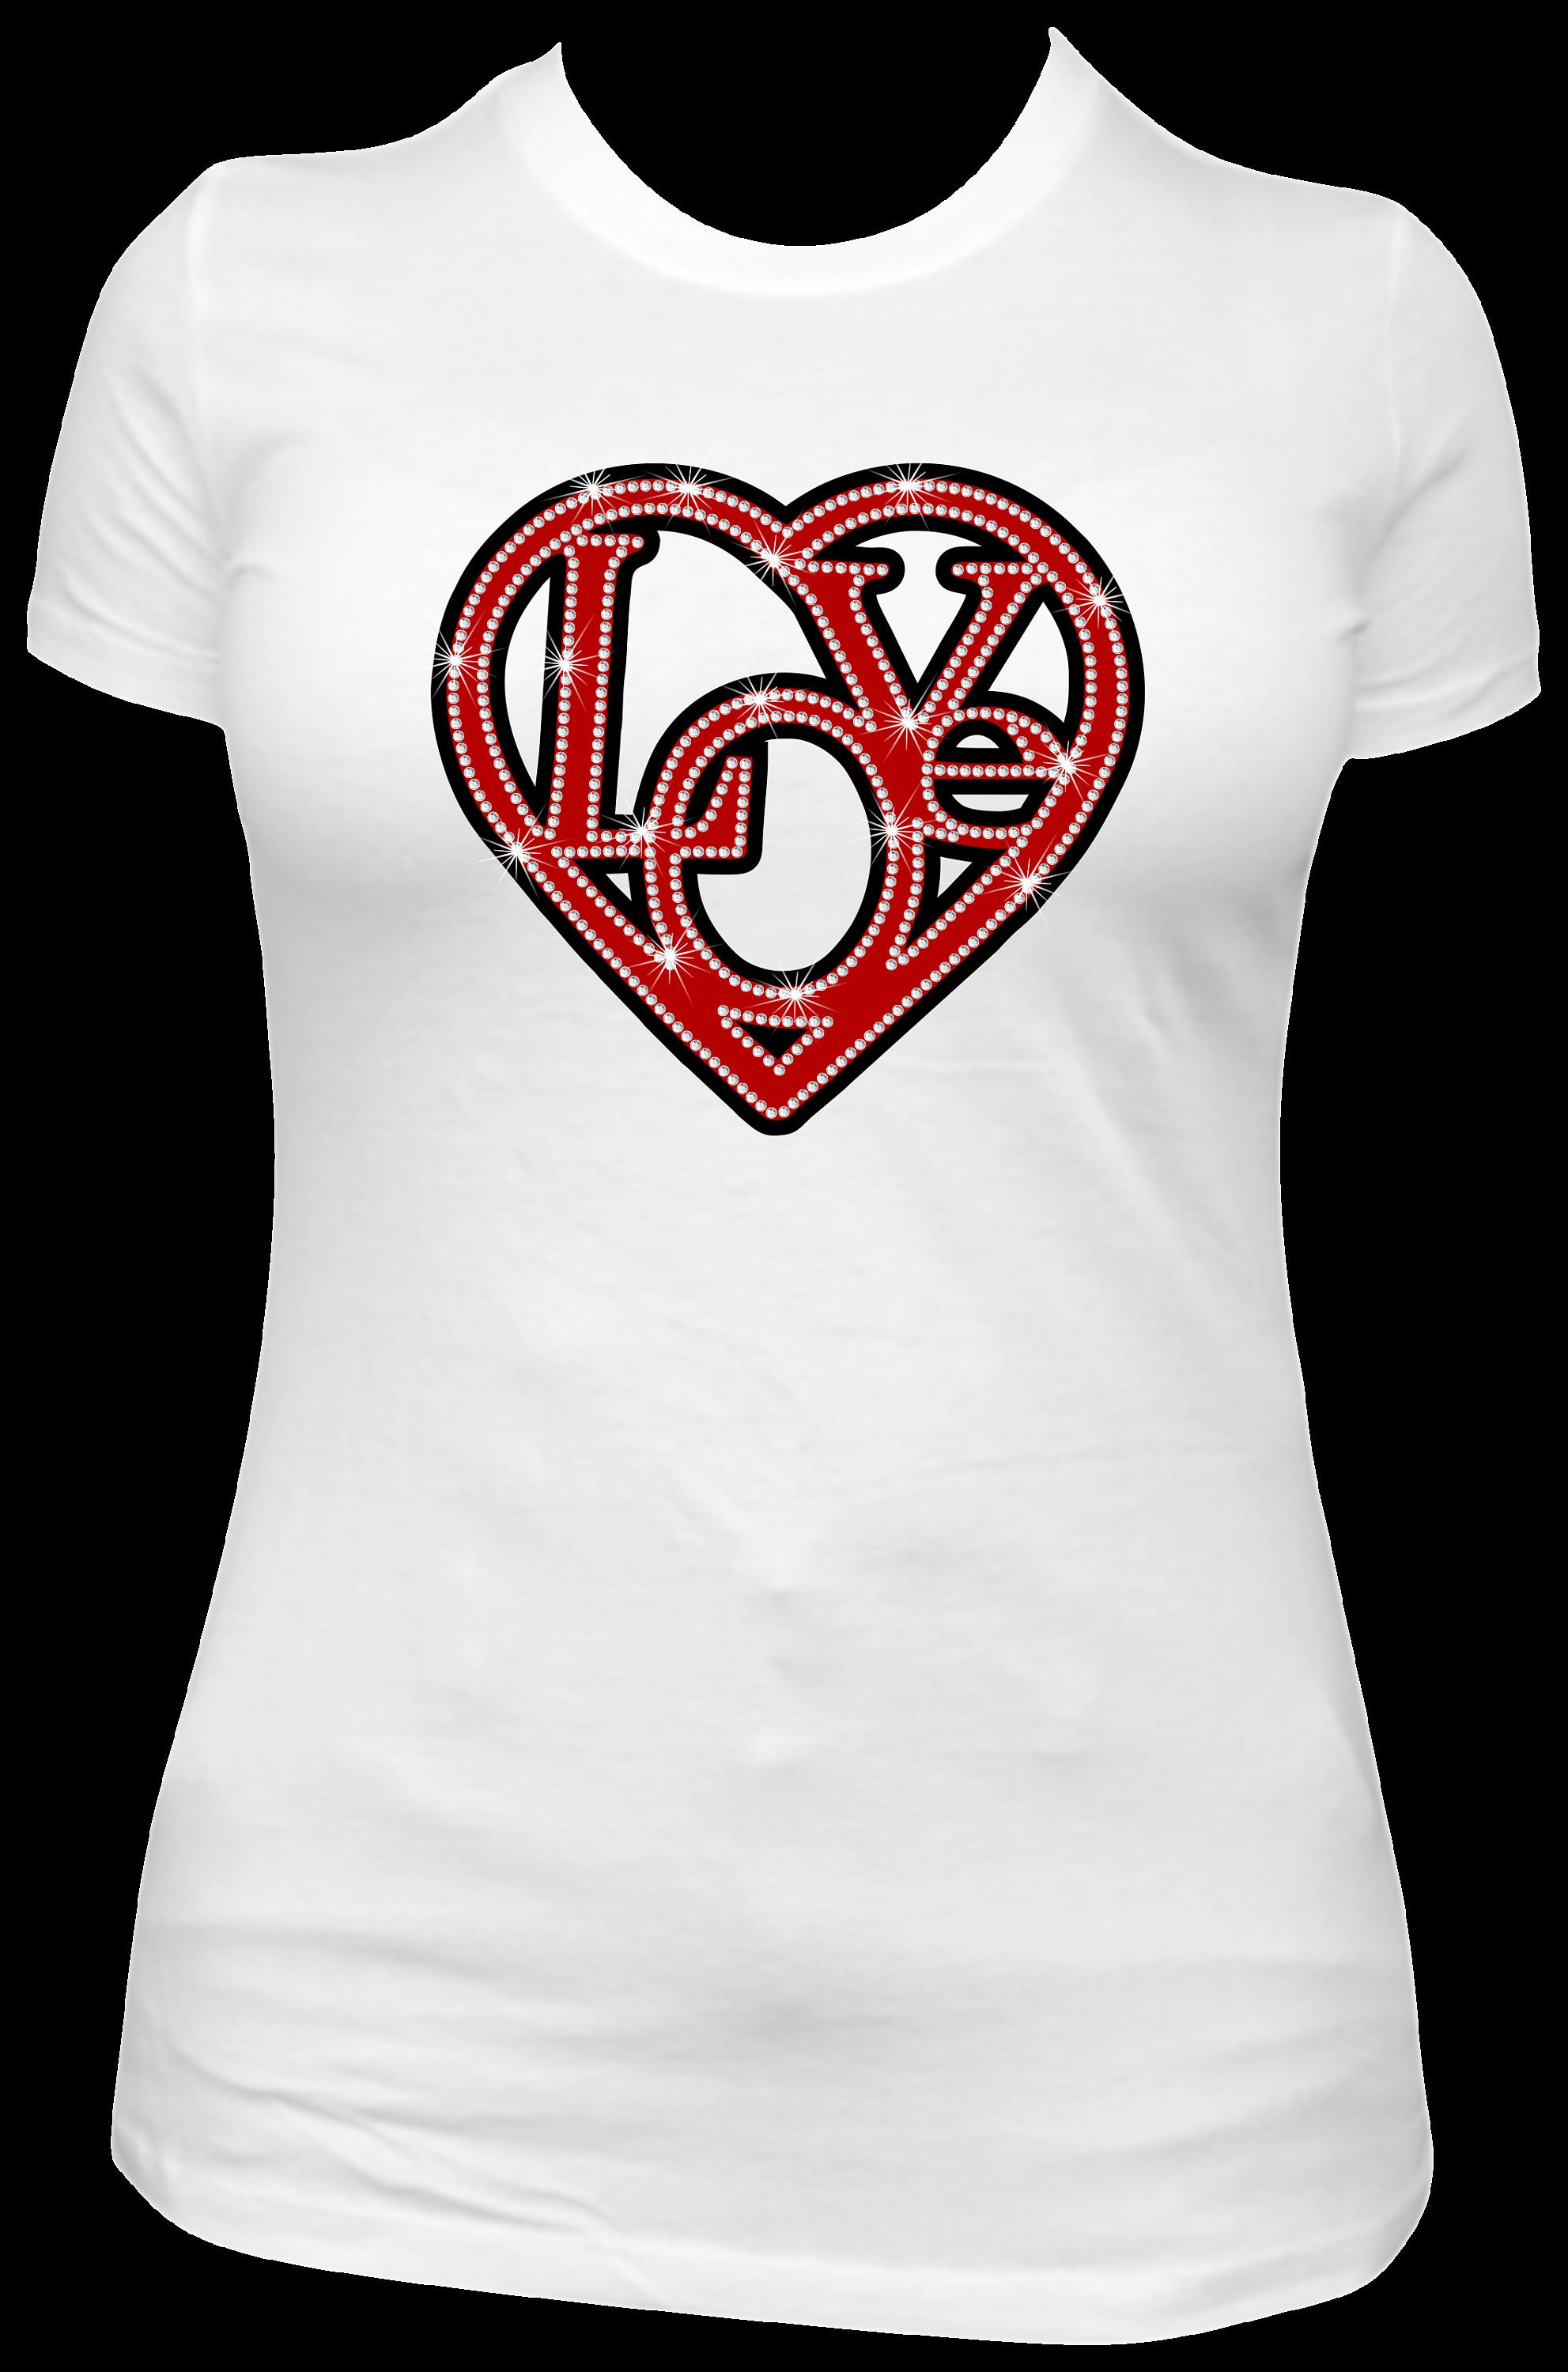 Love Double Heart Rhinestone Design Instant Download